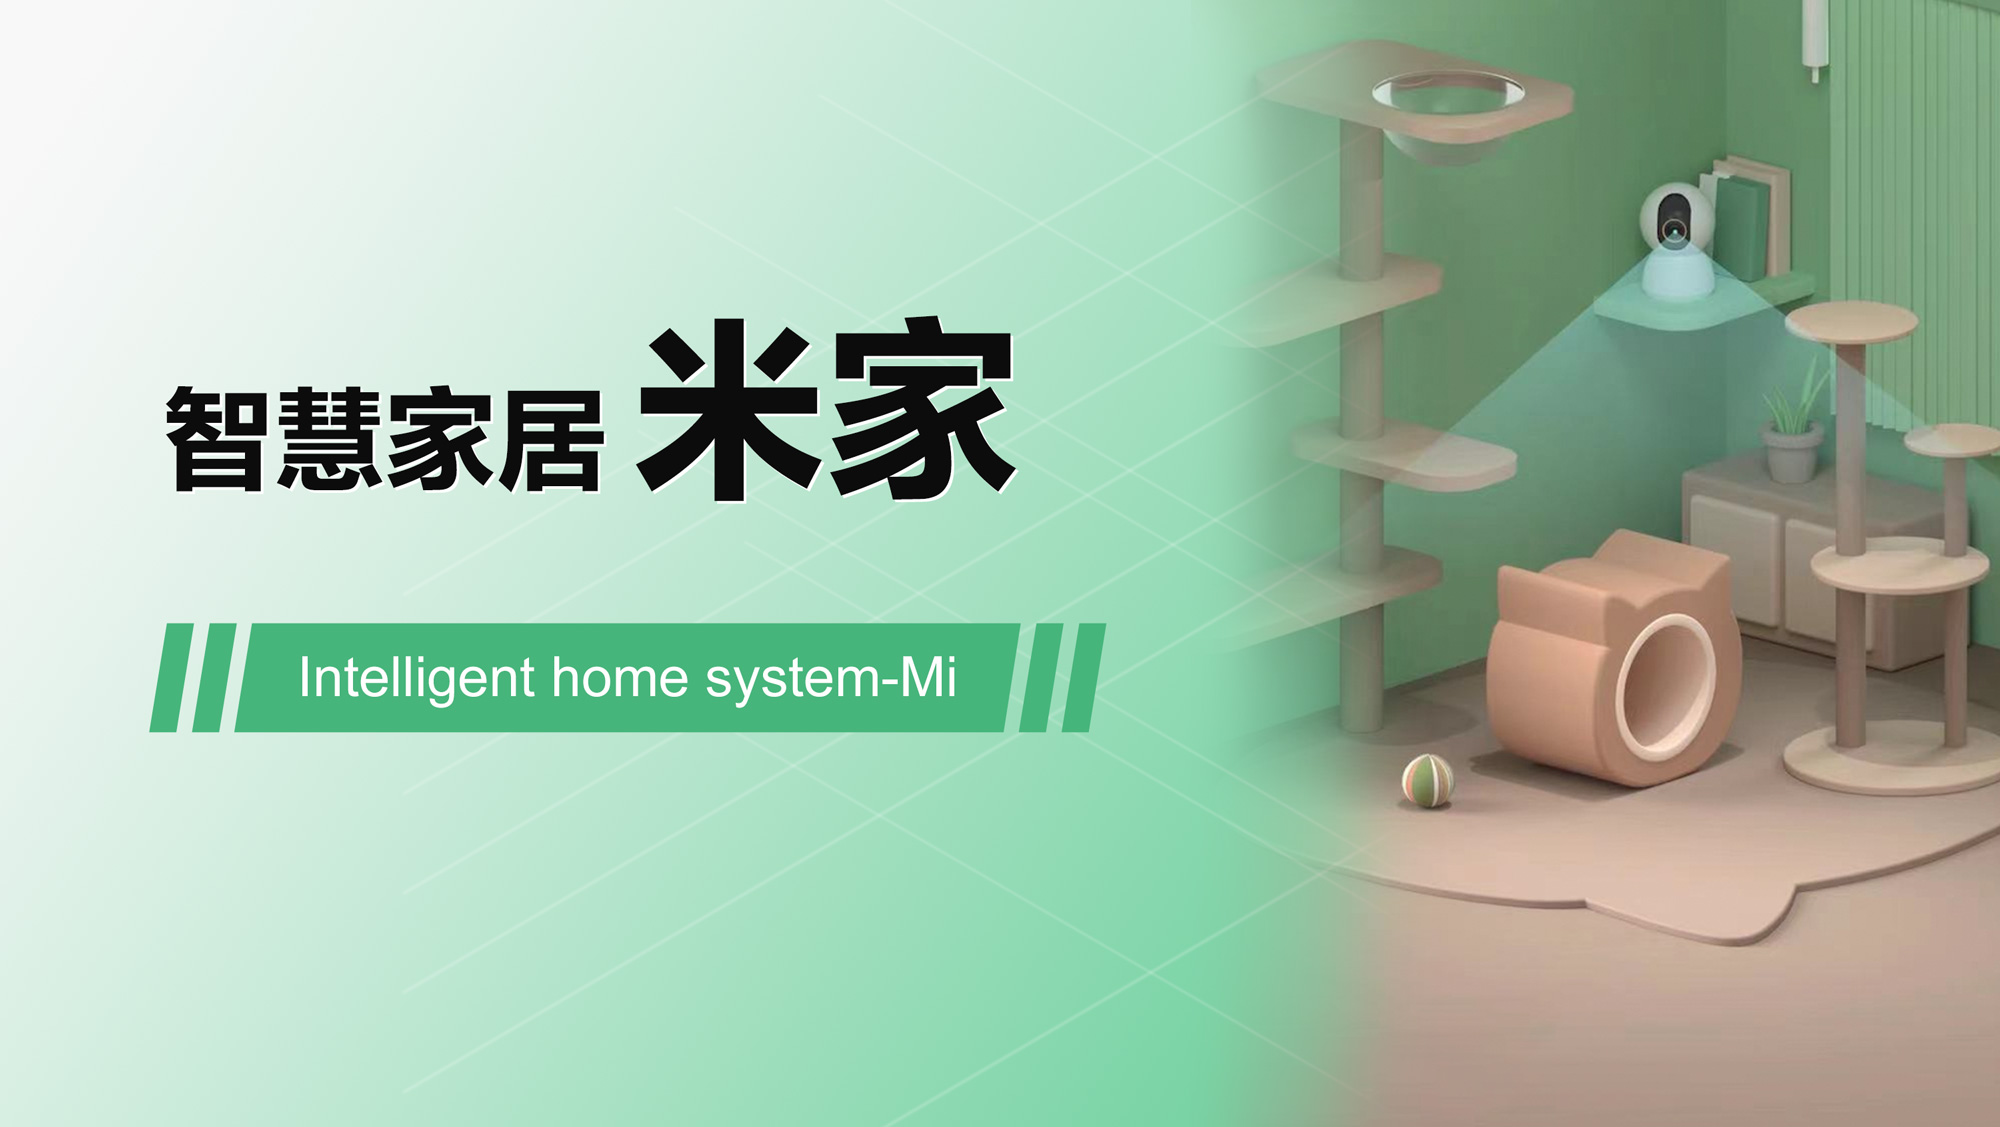 Smart home system: MIJIA